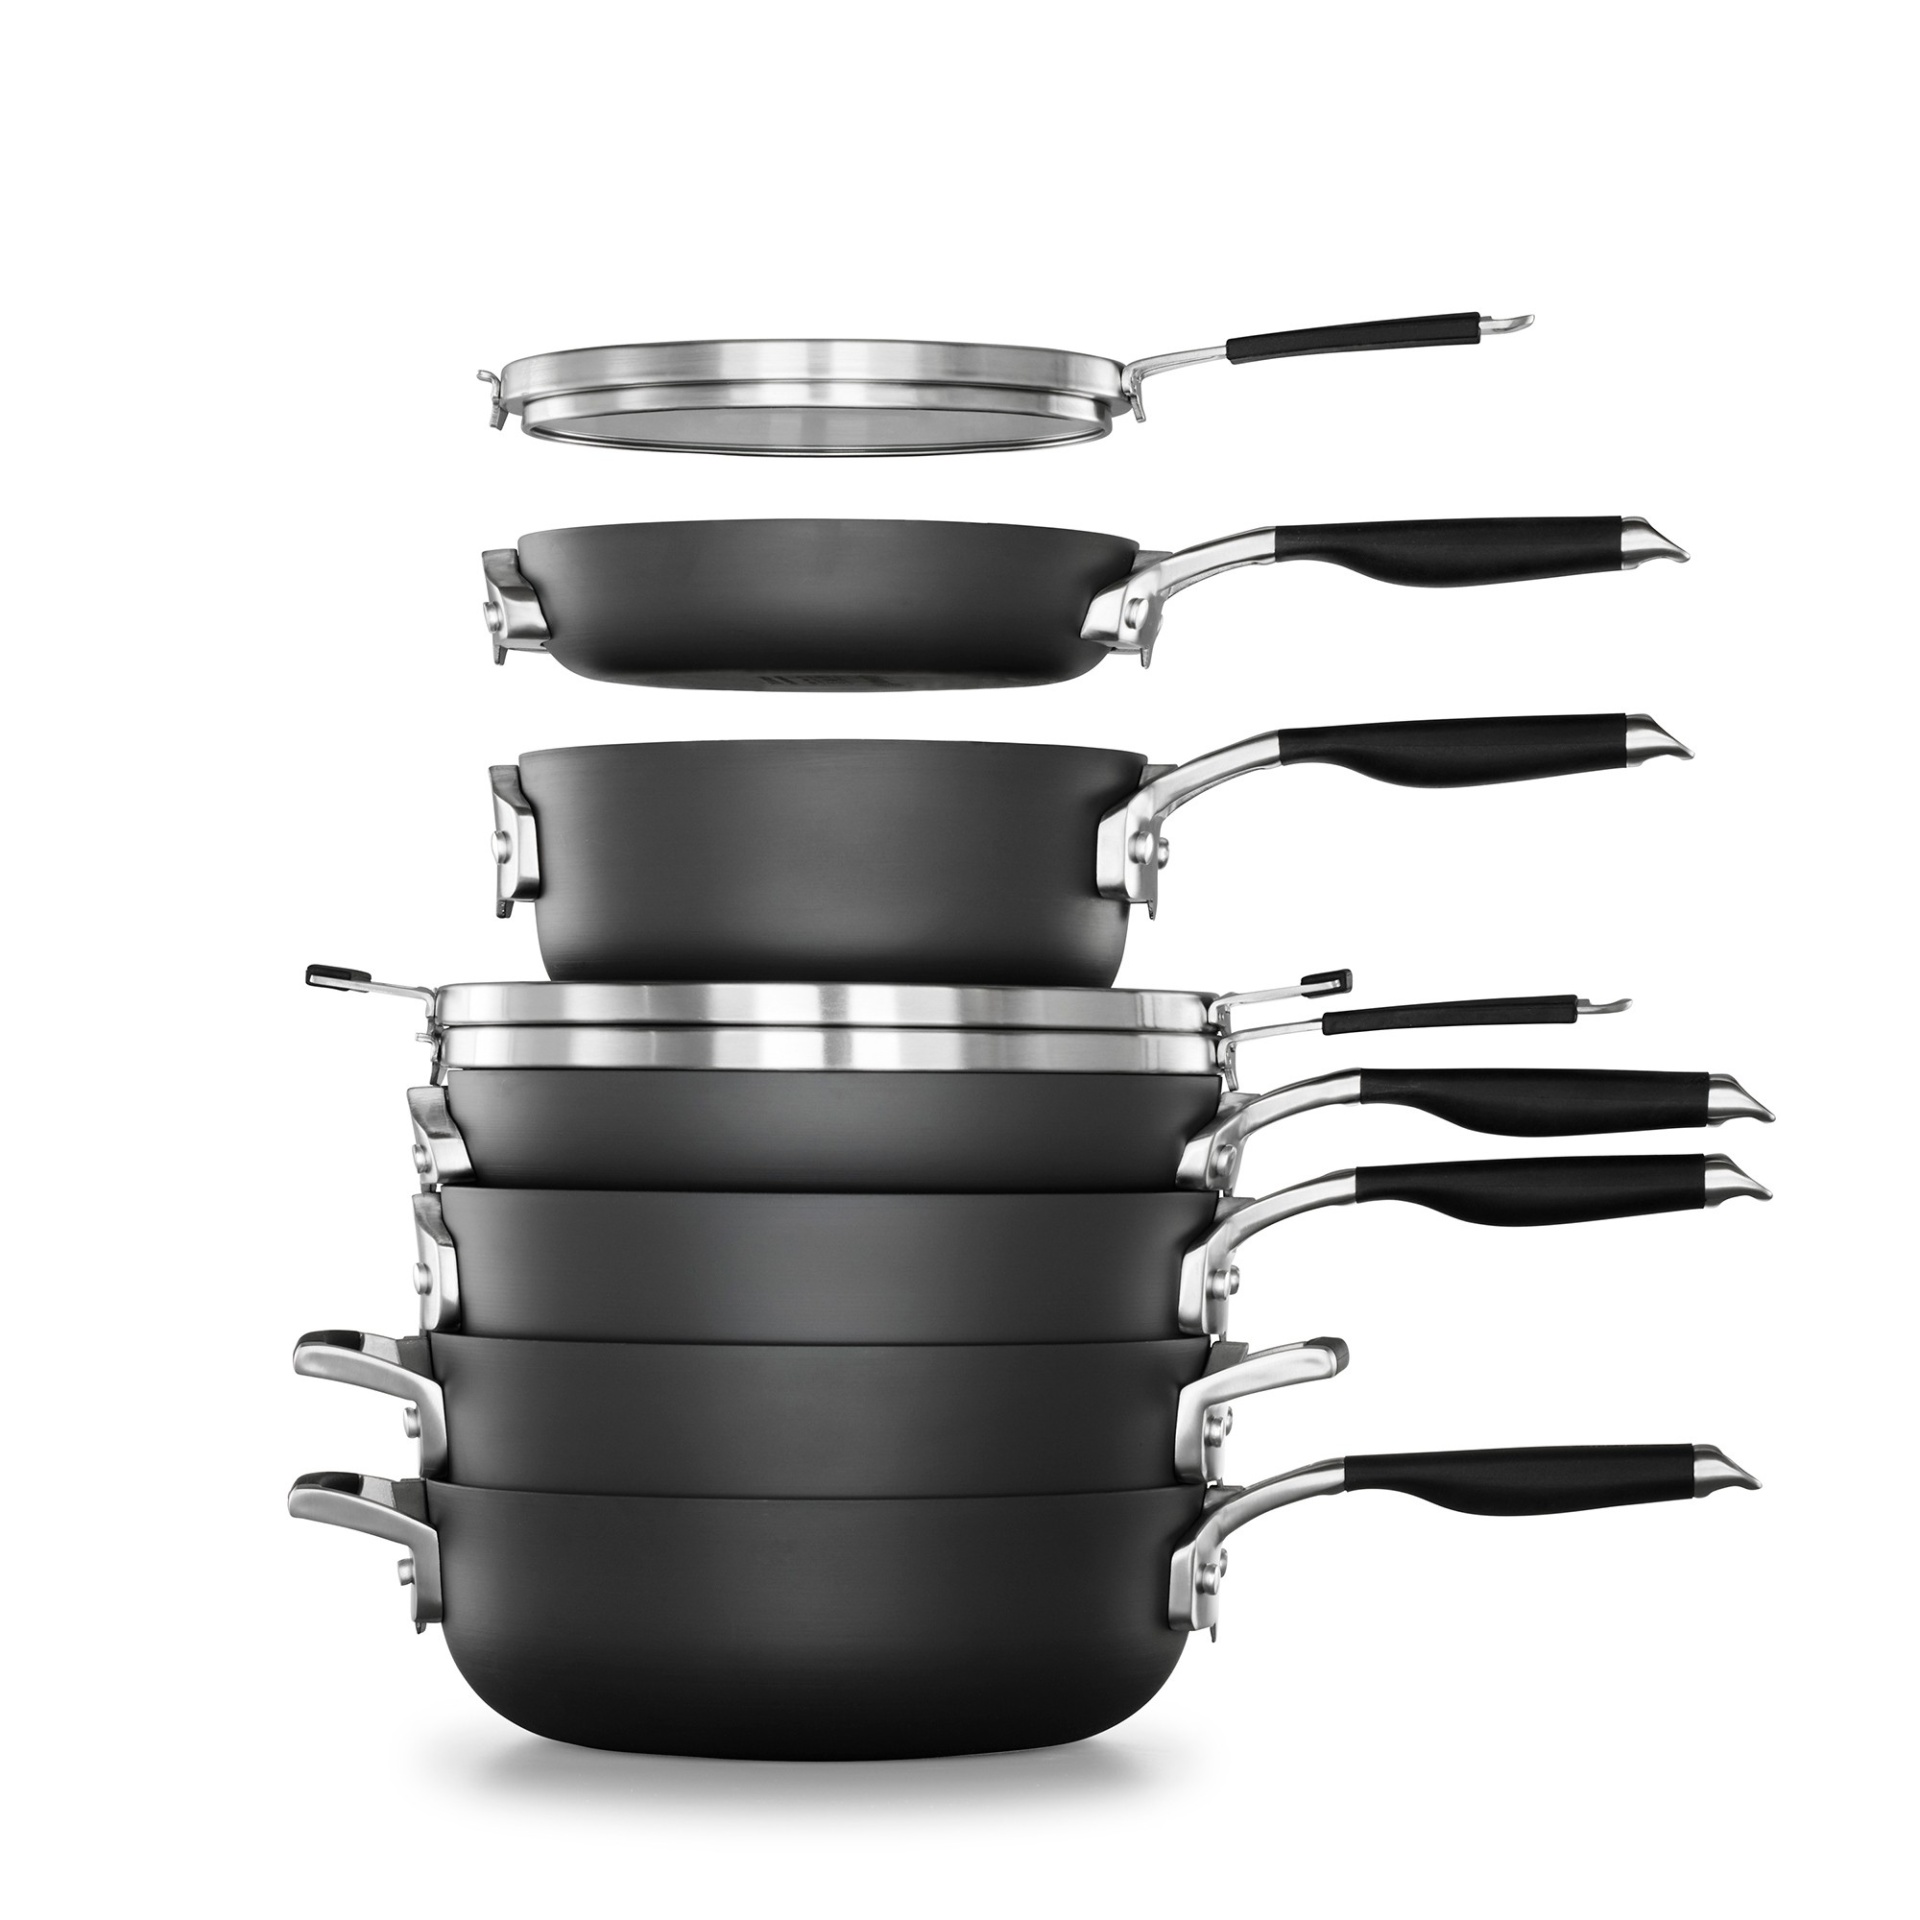 Calphalon Select 9pc Space Saving Hard-Anodized Nonstick Cookware Set 9 ct